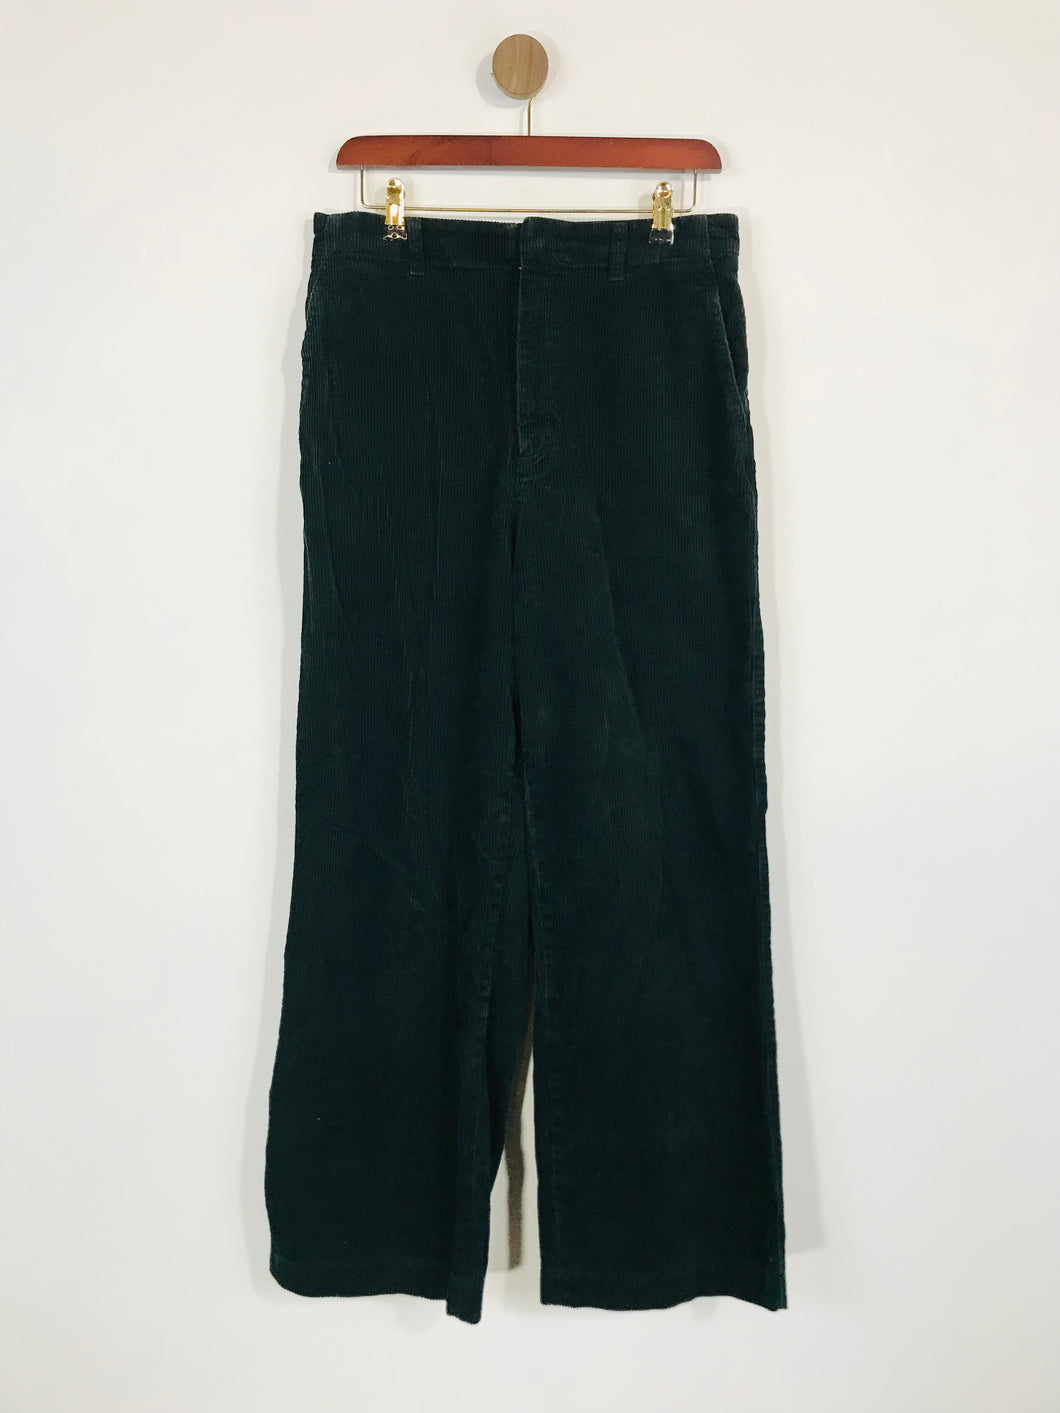 Uniqlo Women's Cotton High Waist Corduroy Trousers | 29 UK10-12 | Green